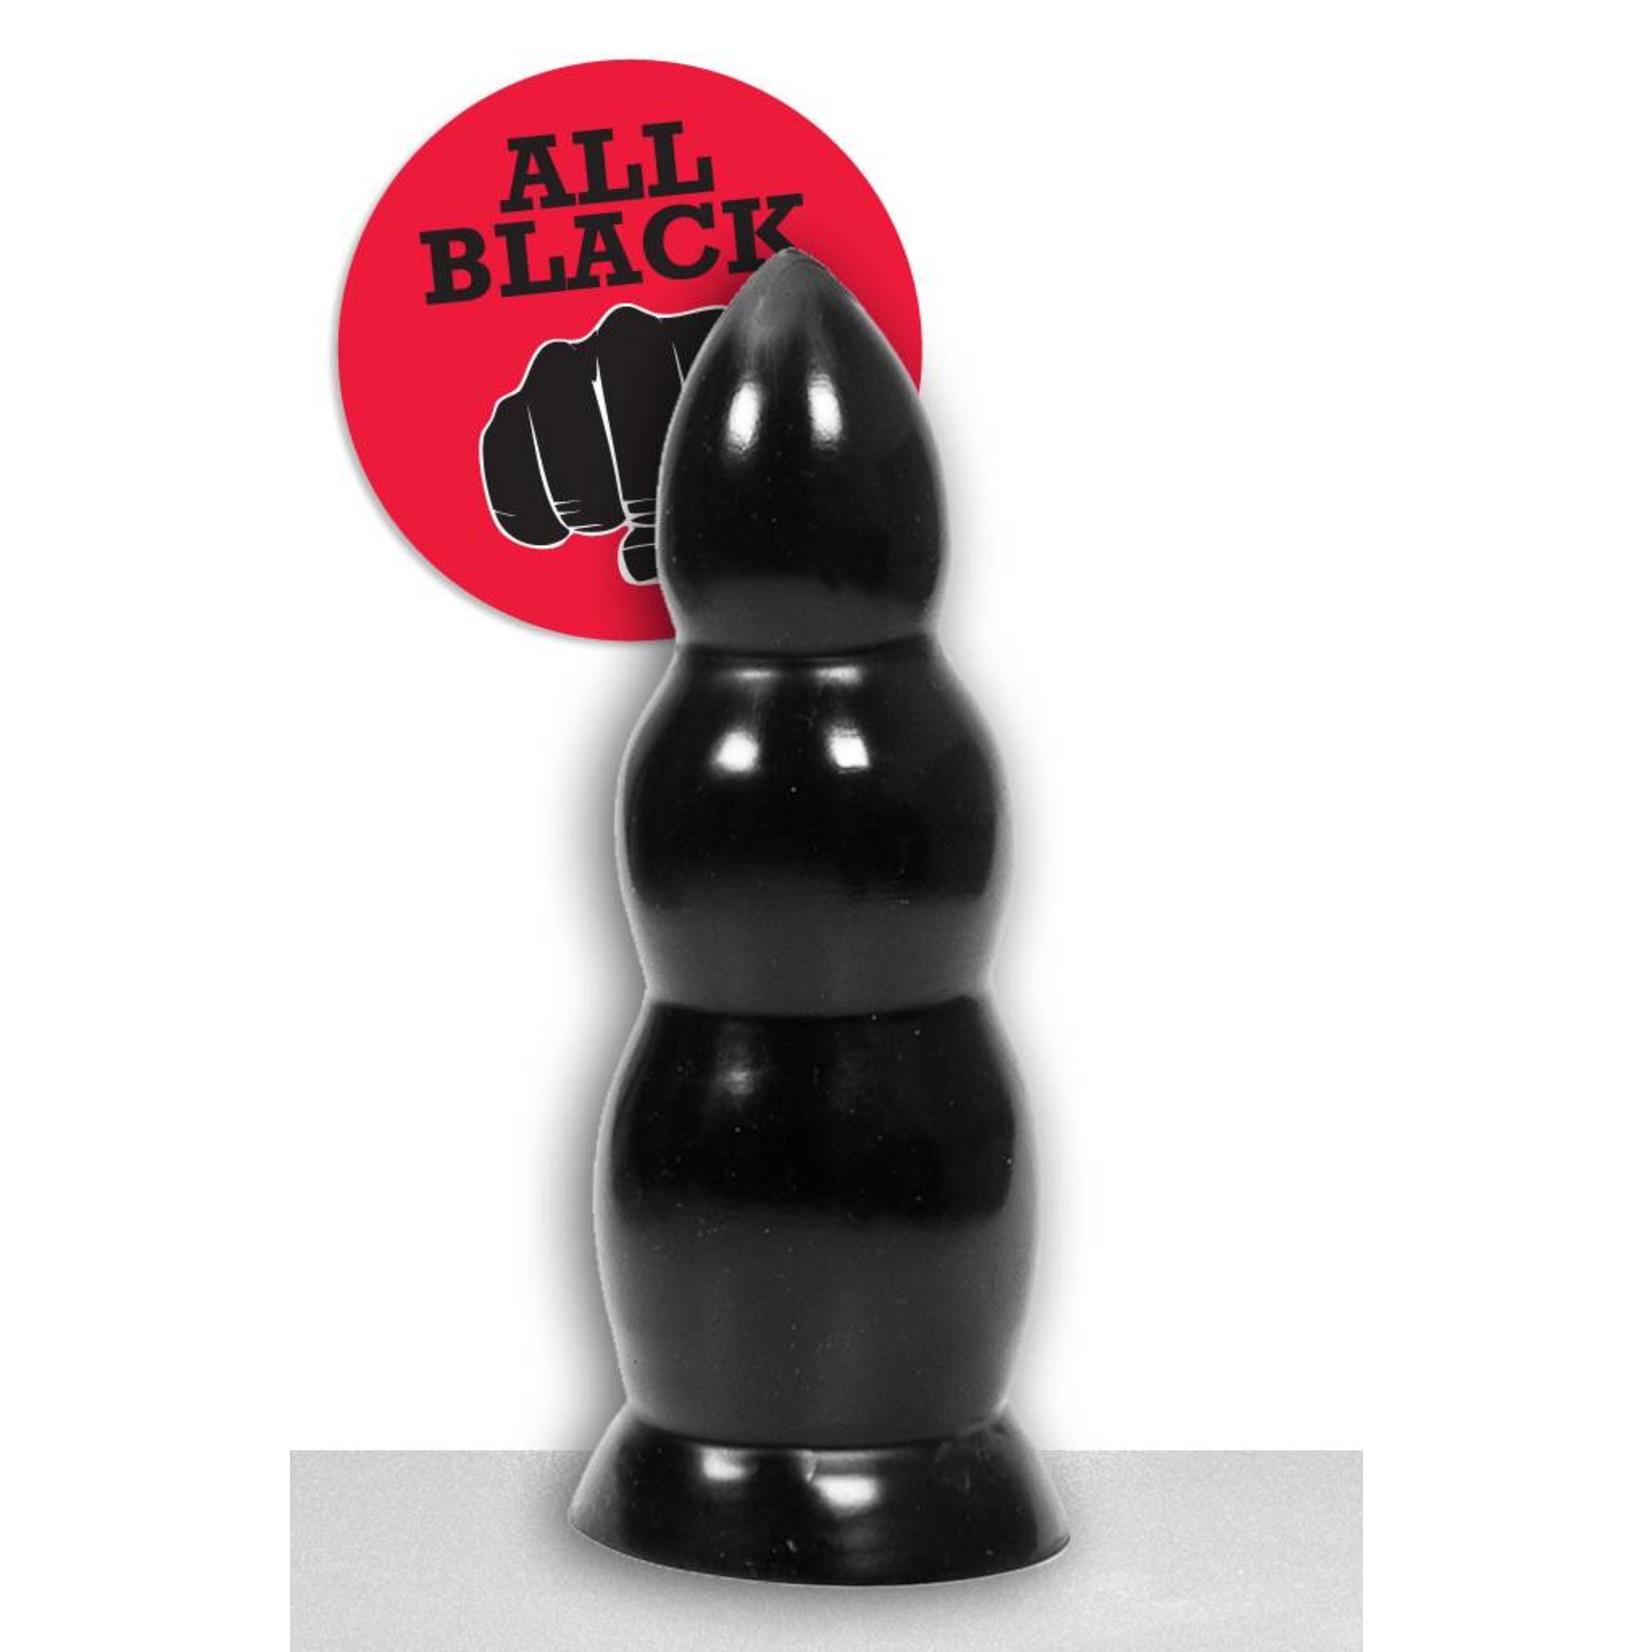 All Black All Black Dildo - AB 37